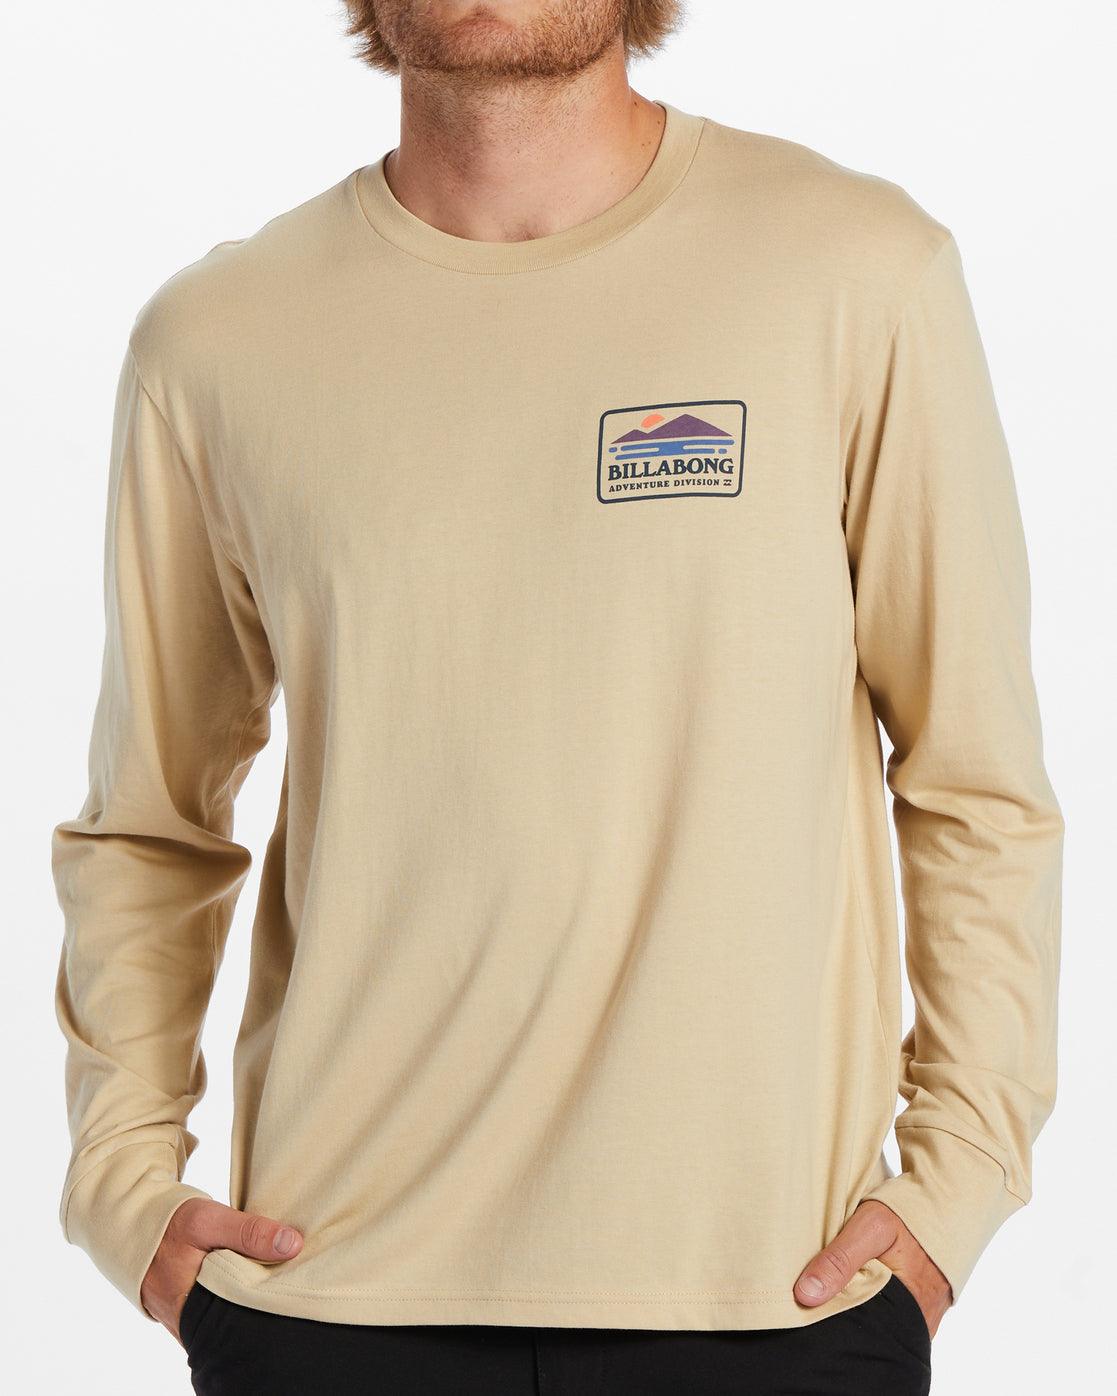 Range Long Sleeve TShirt - SoHa Surf Shop